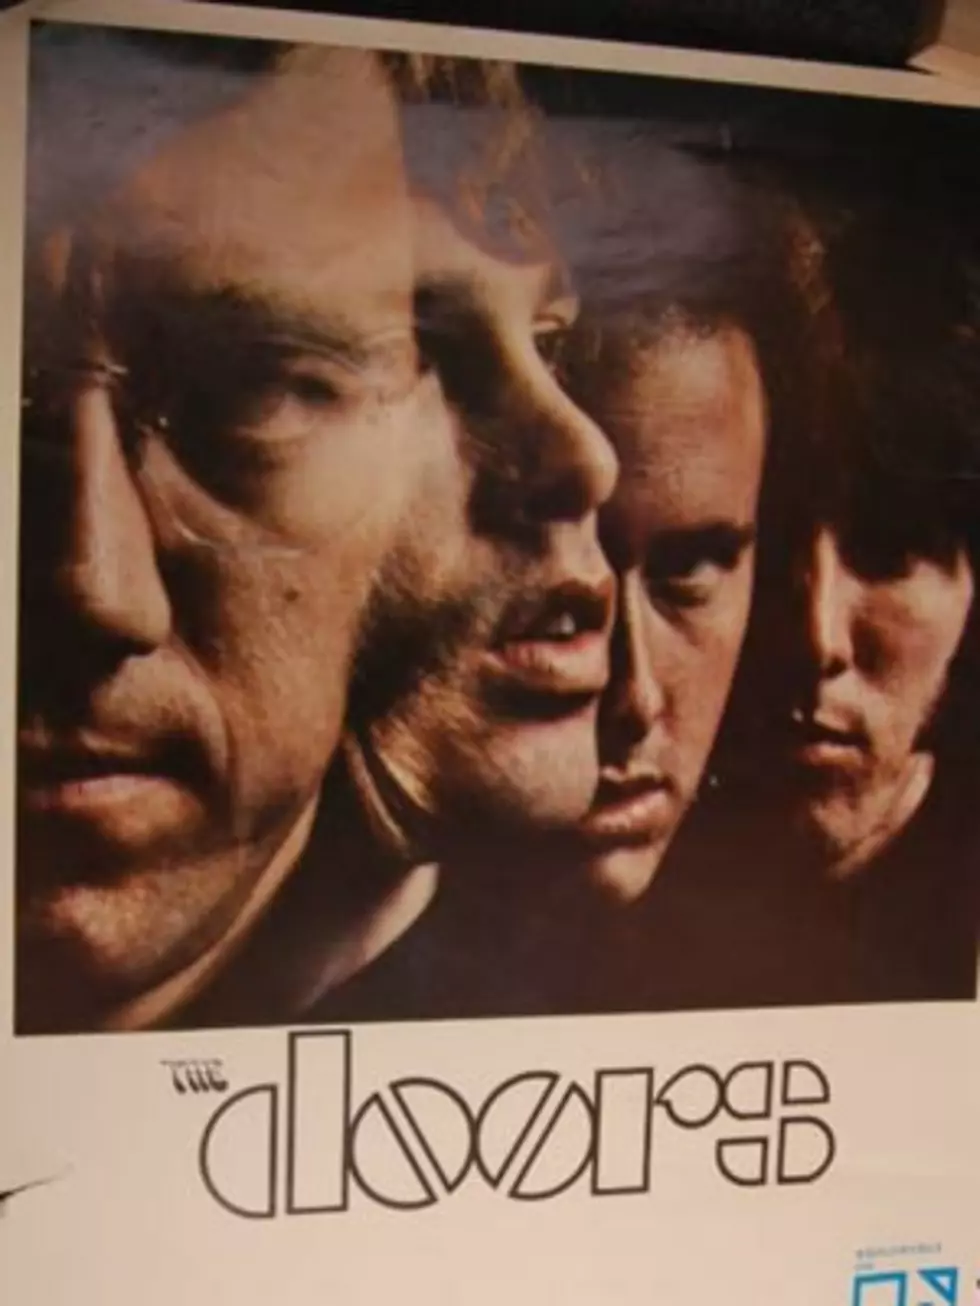 1967 Doors Promo Poster Sells For $317 on eBay